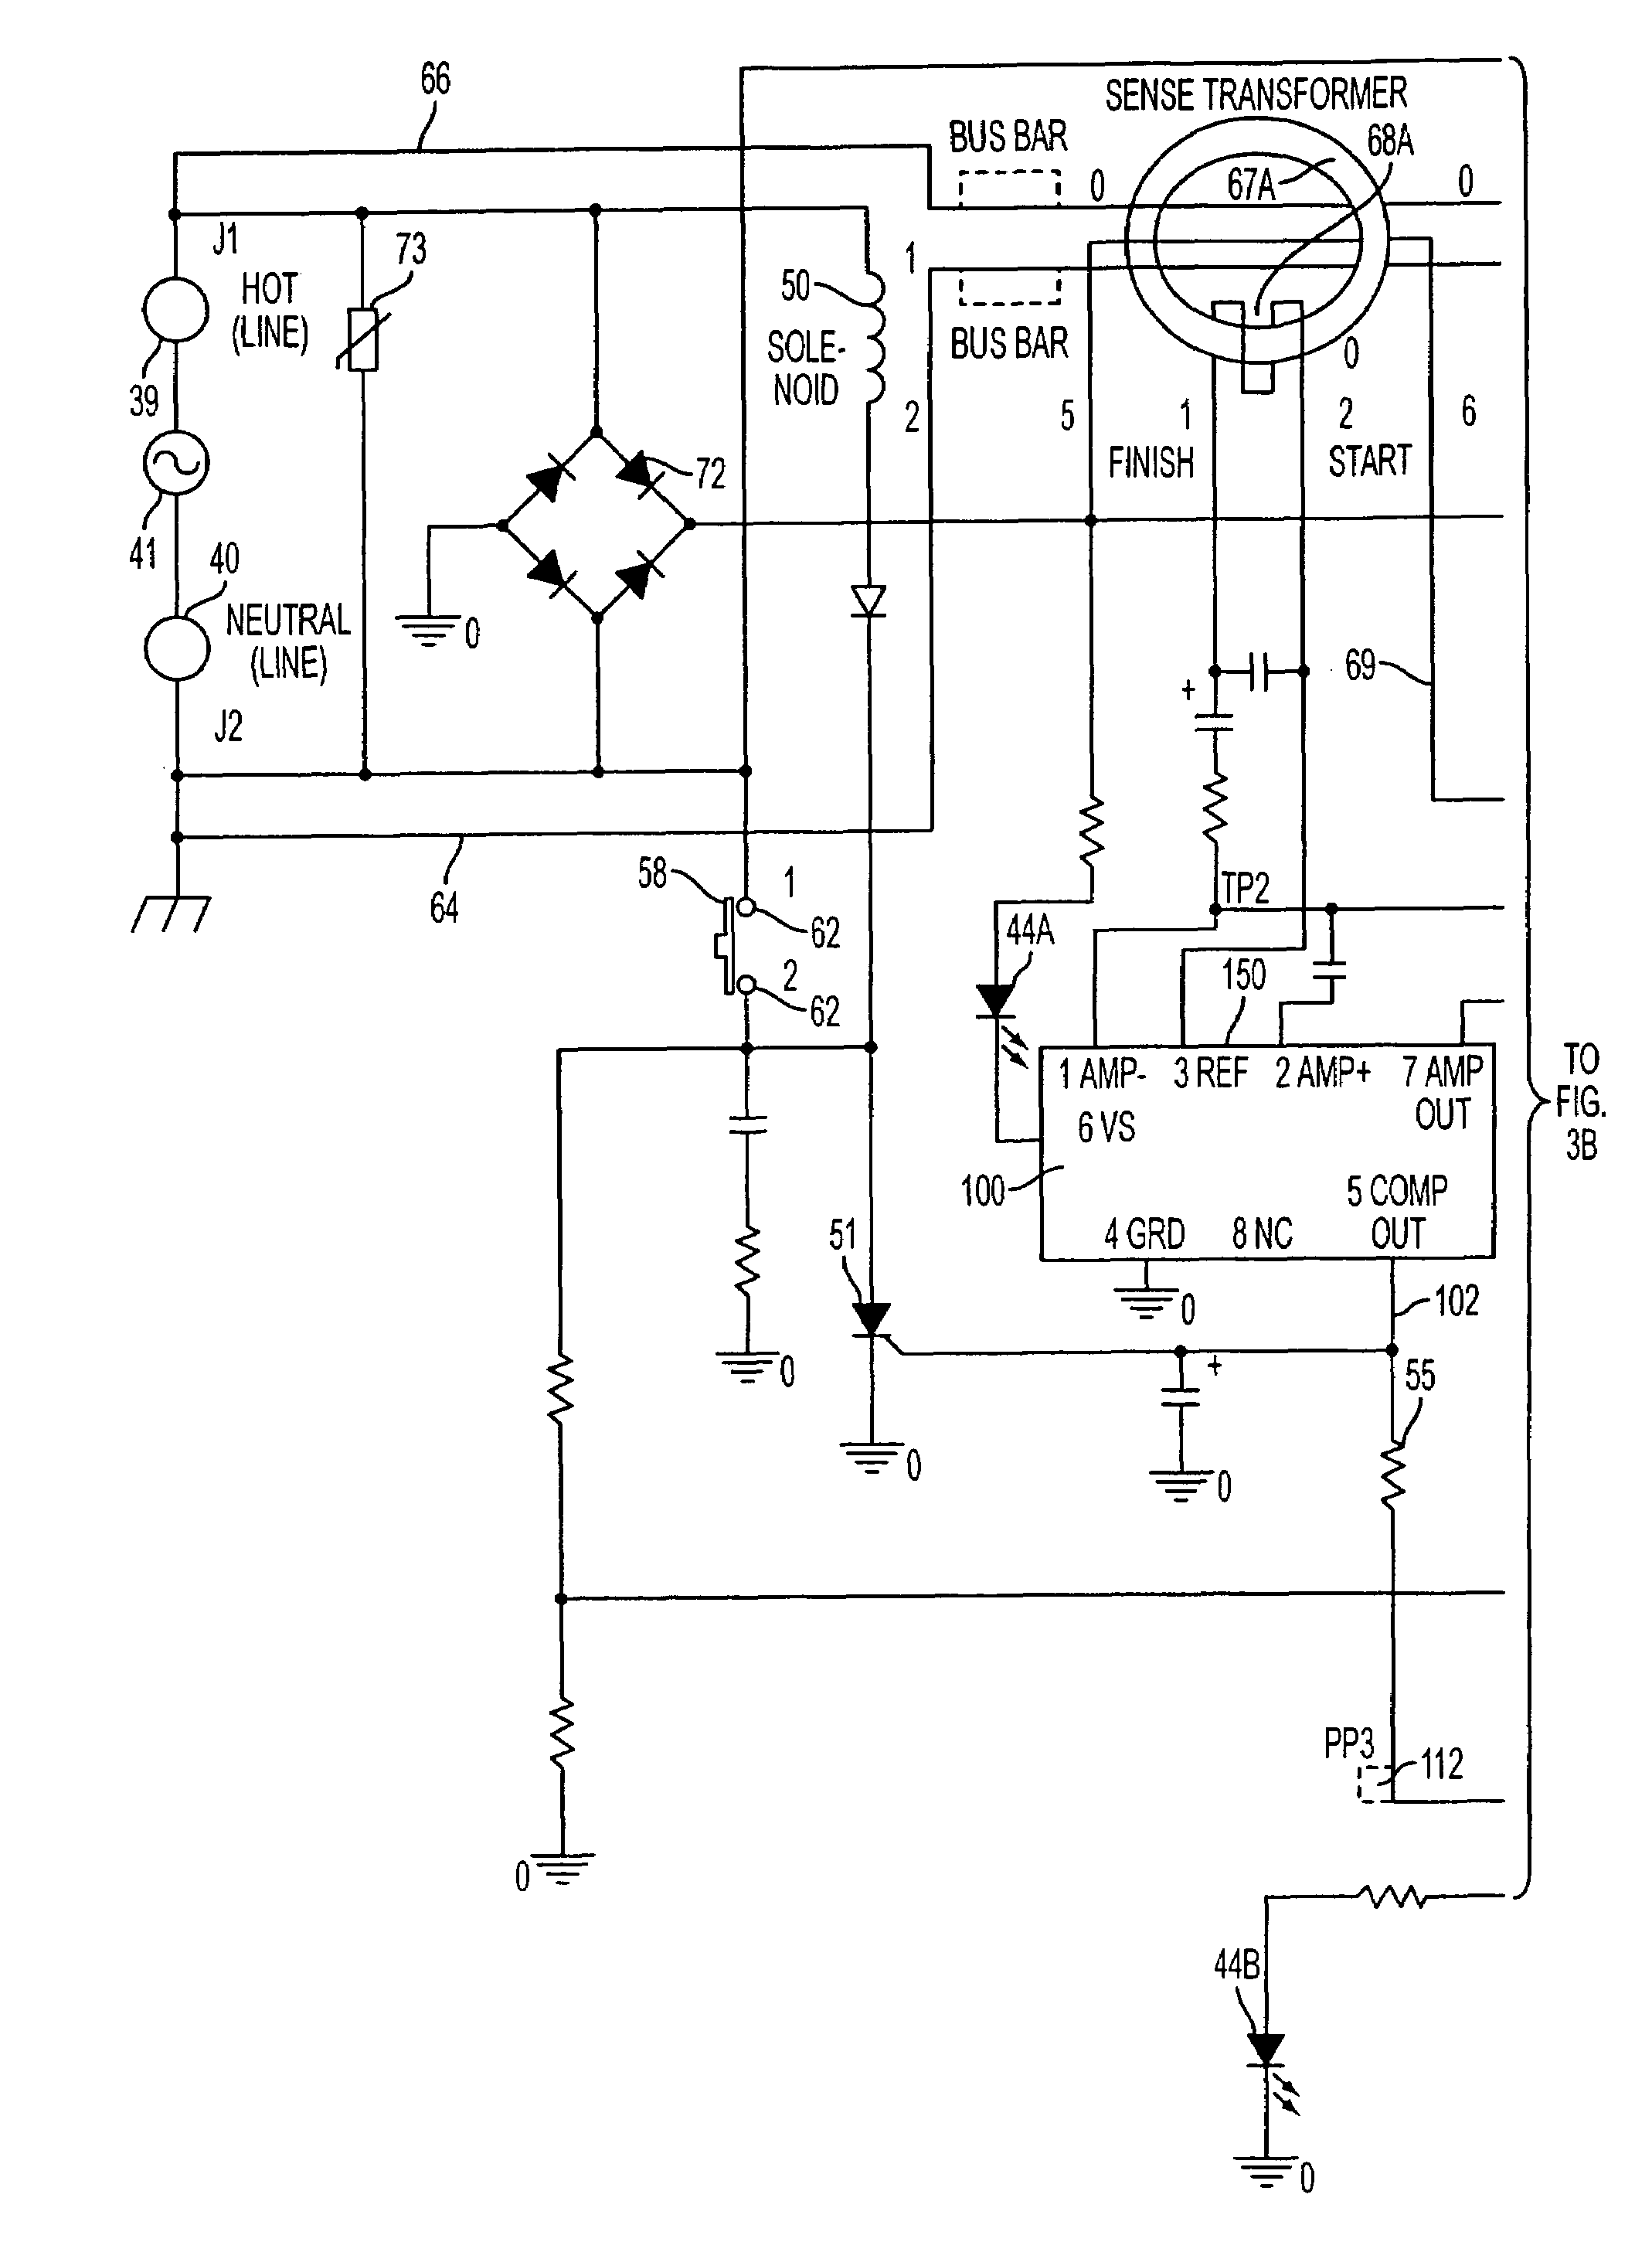 Self testing ground fault circuit interrupter (GFCI)